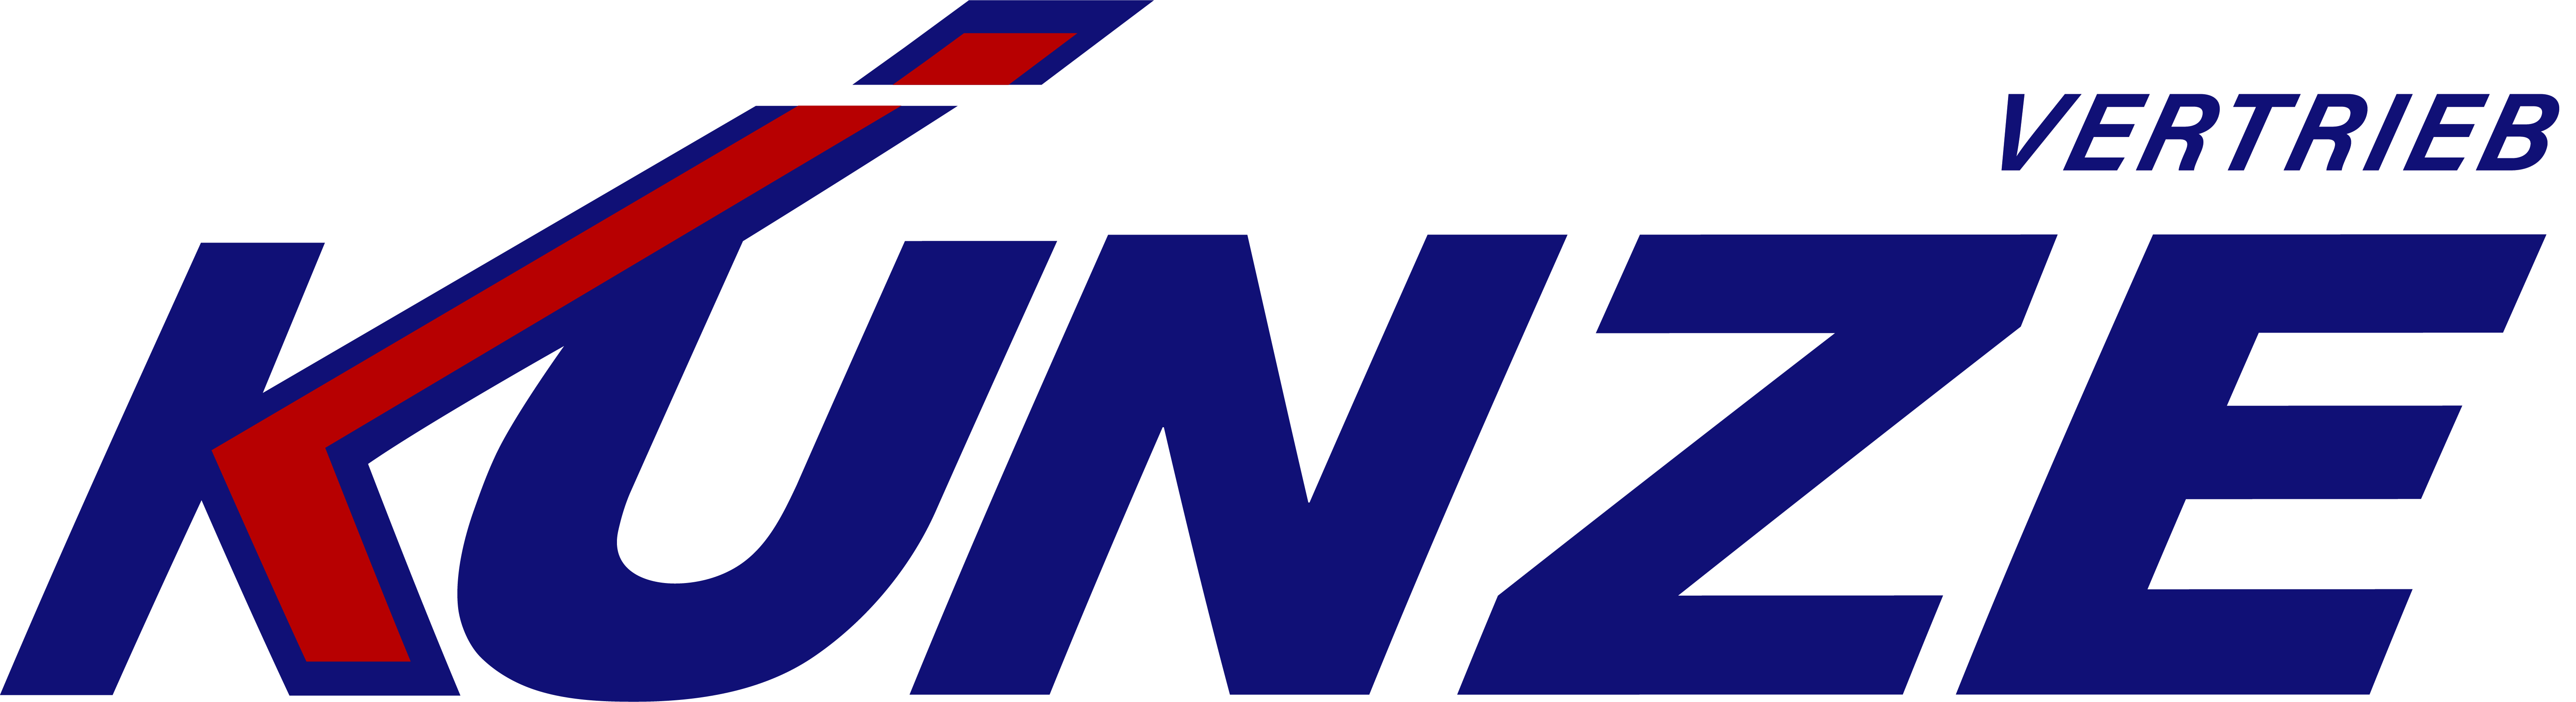 KUNZE_Logo_2021_Vertrieb_2